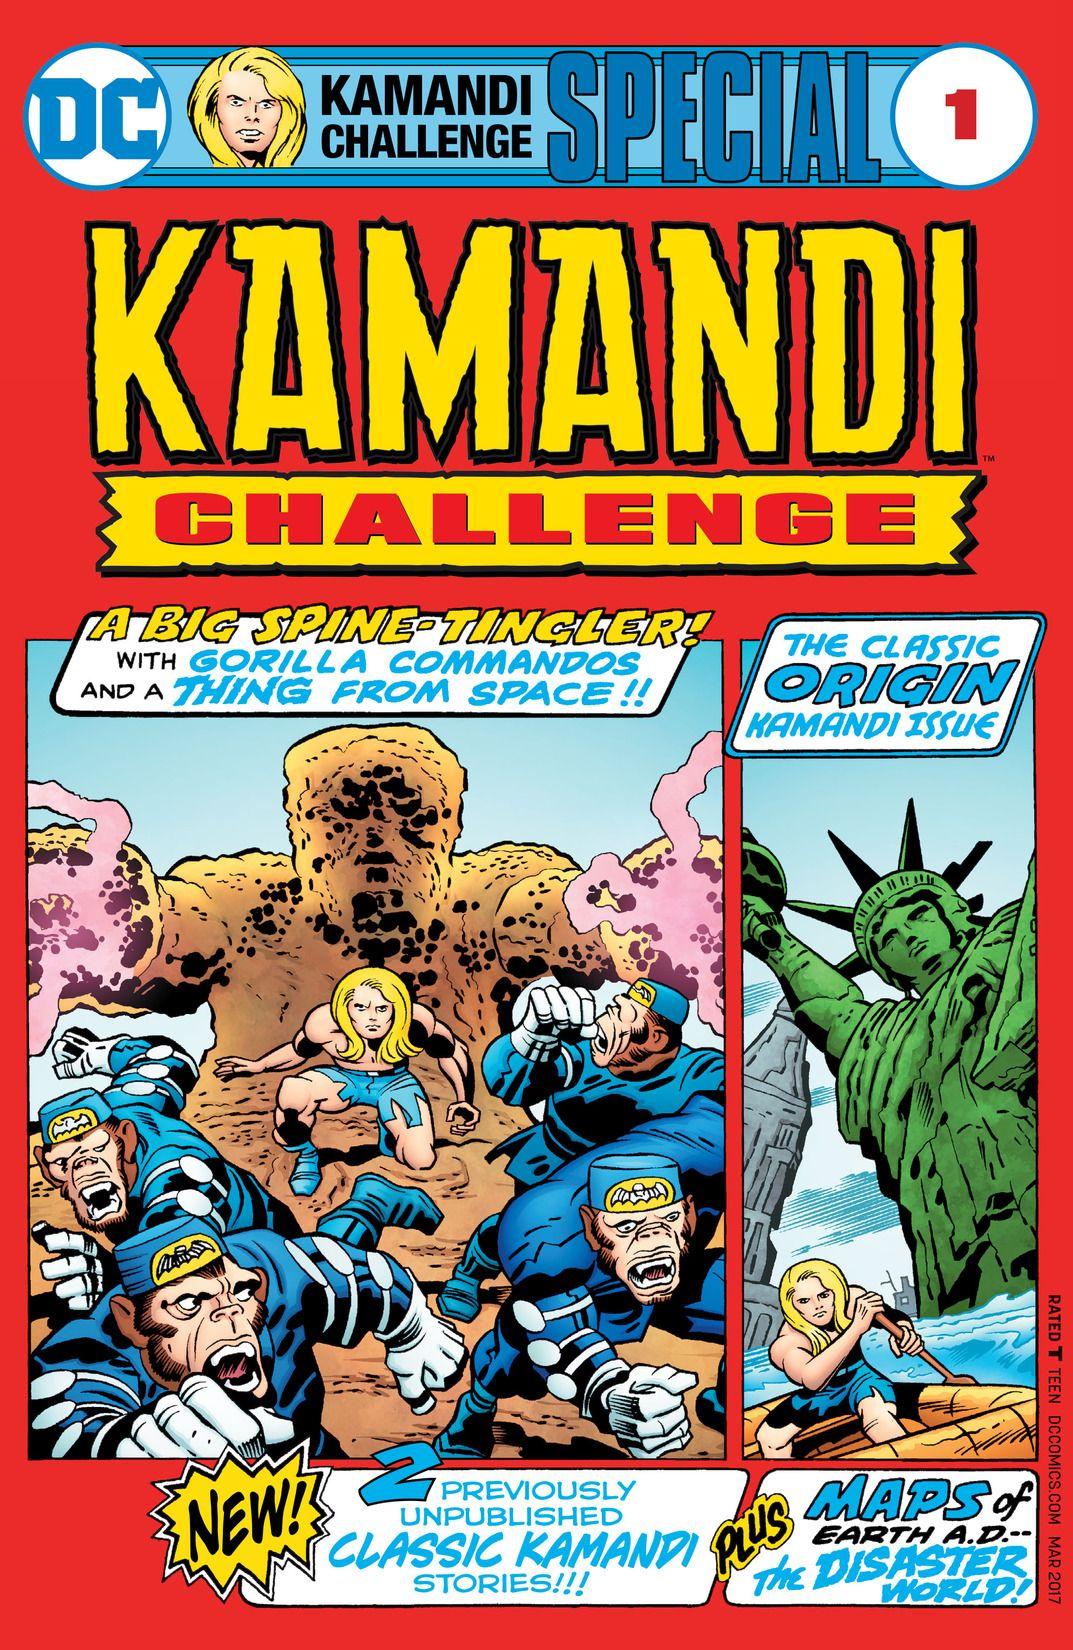 The Kamandi Challenge Special Vol. 1 #1